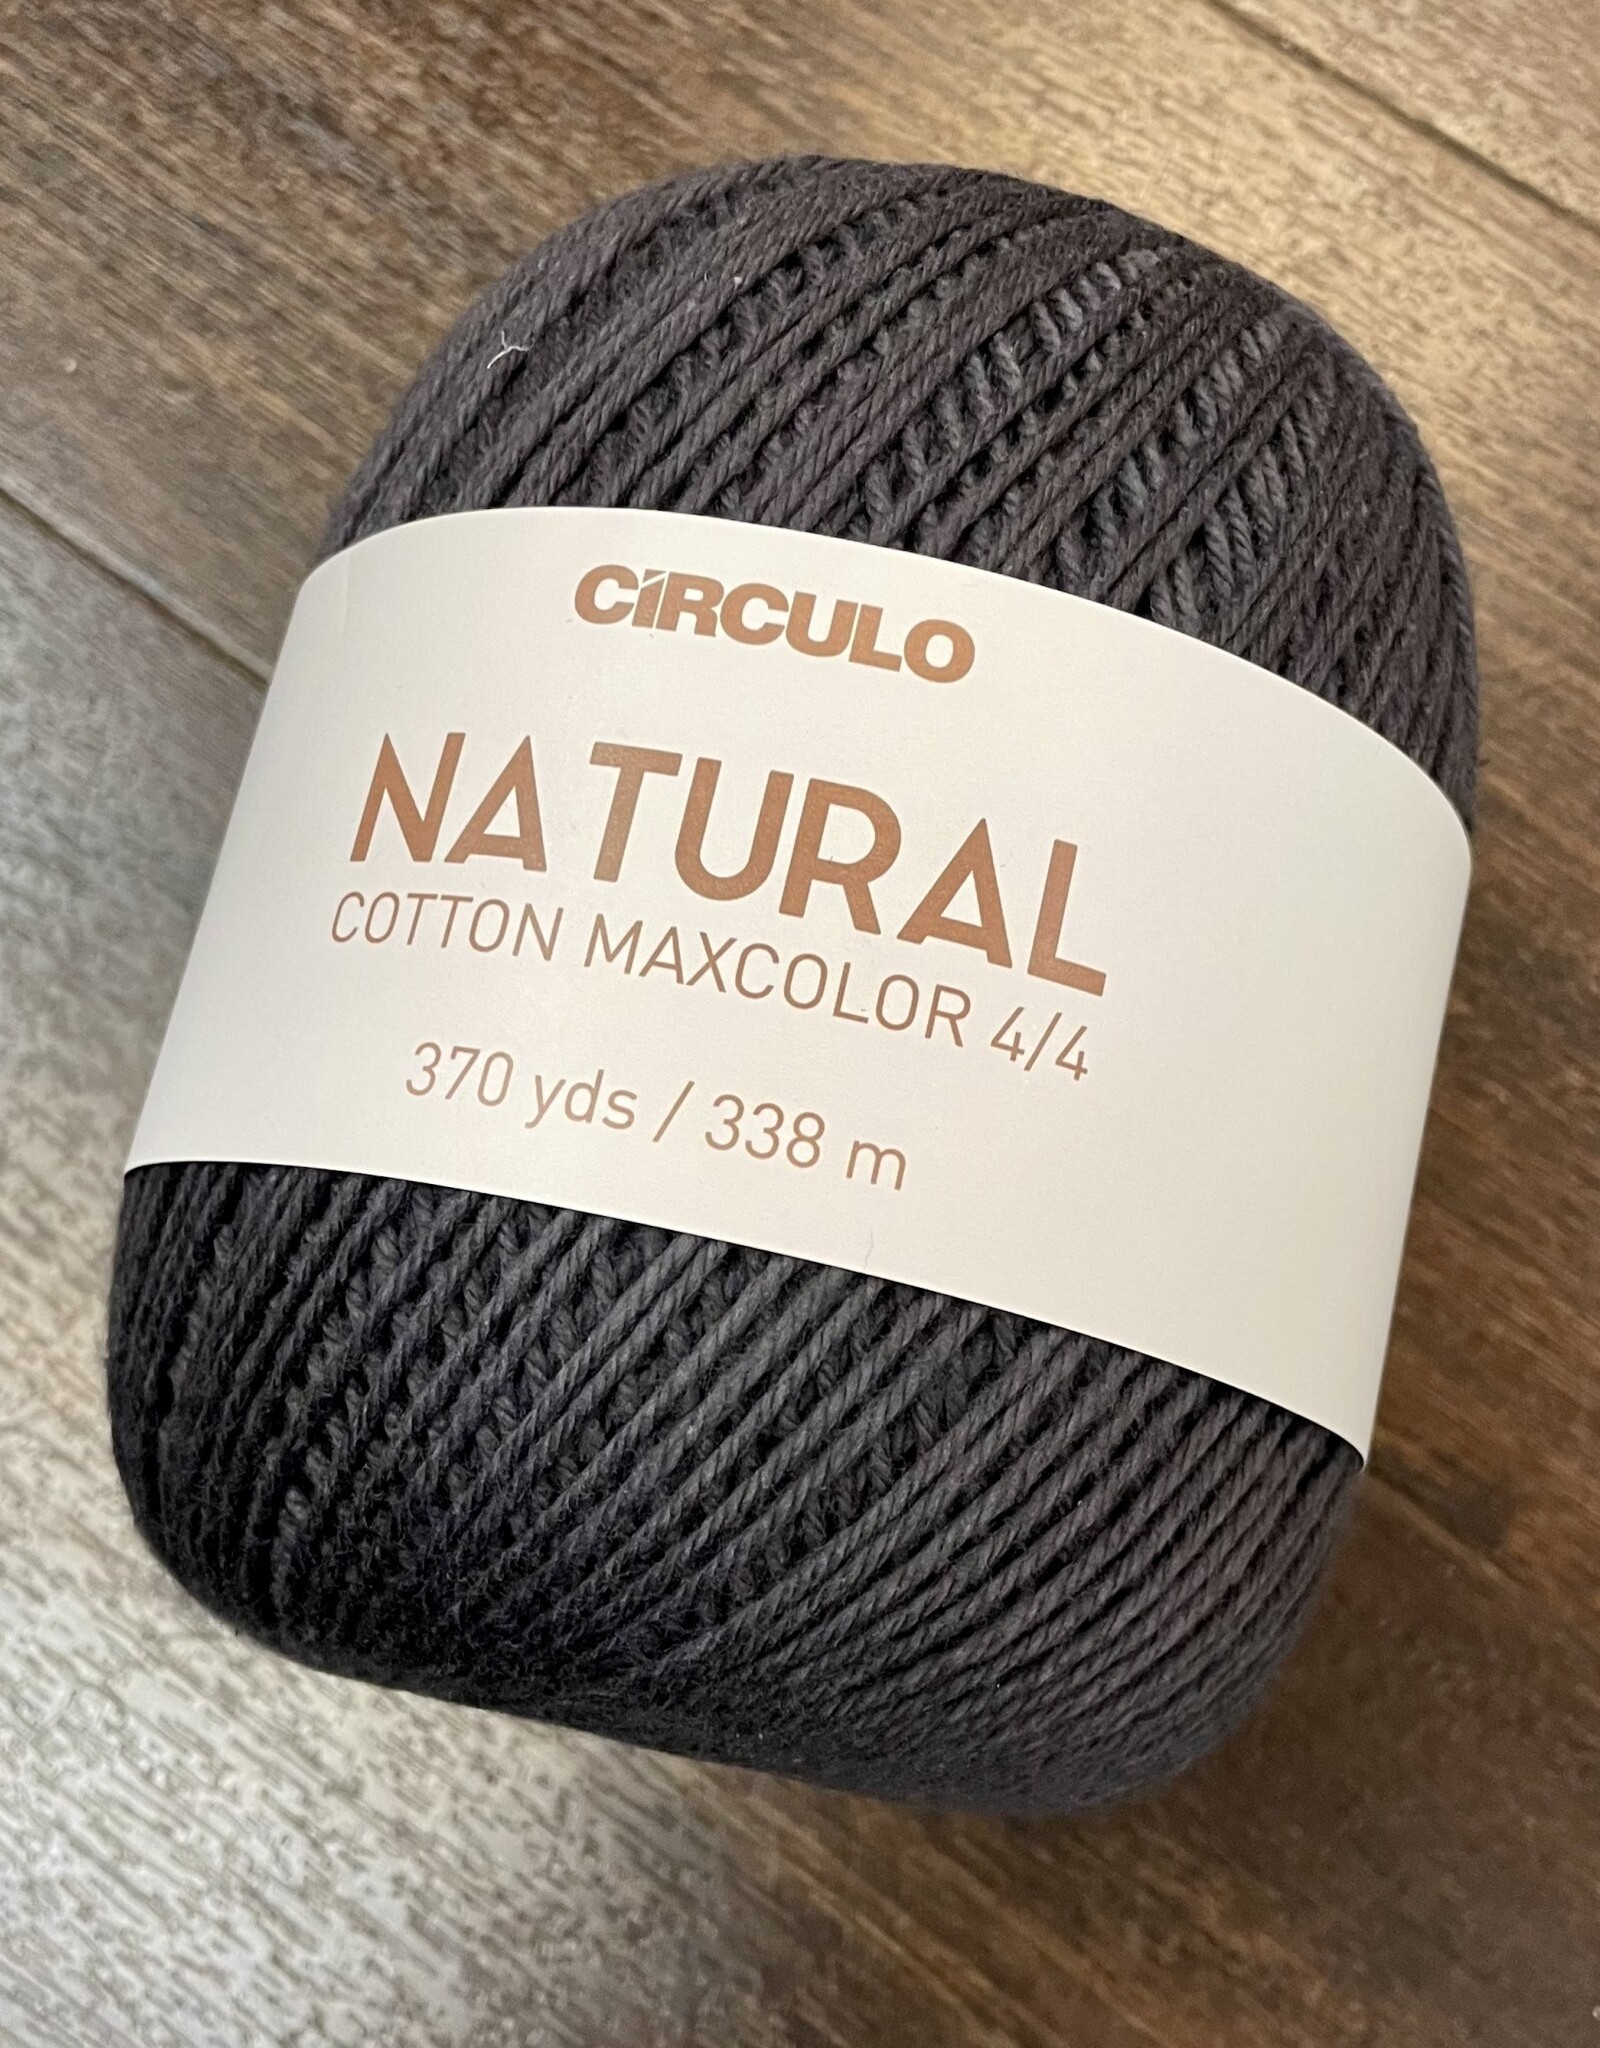 Circulo Natural Cotton Maxcolor 4/4 by Circulo